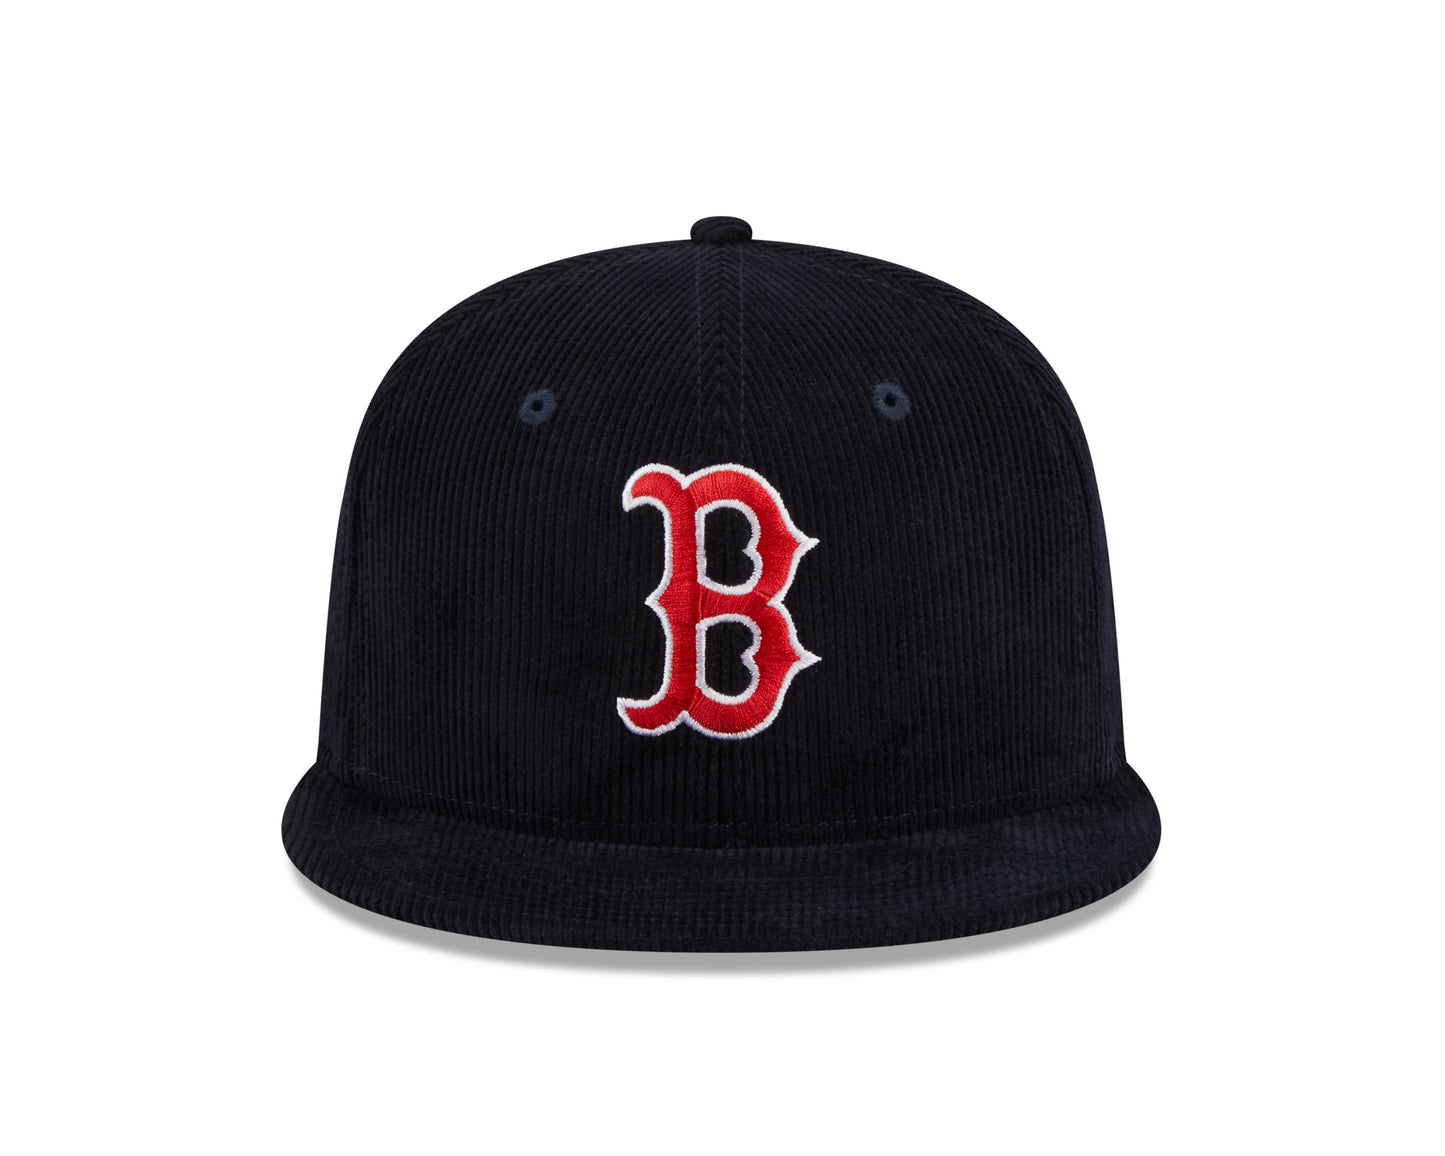 New Era - Boston Red Sox Throwback Cord - Navy - Headz Up 